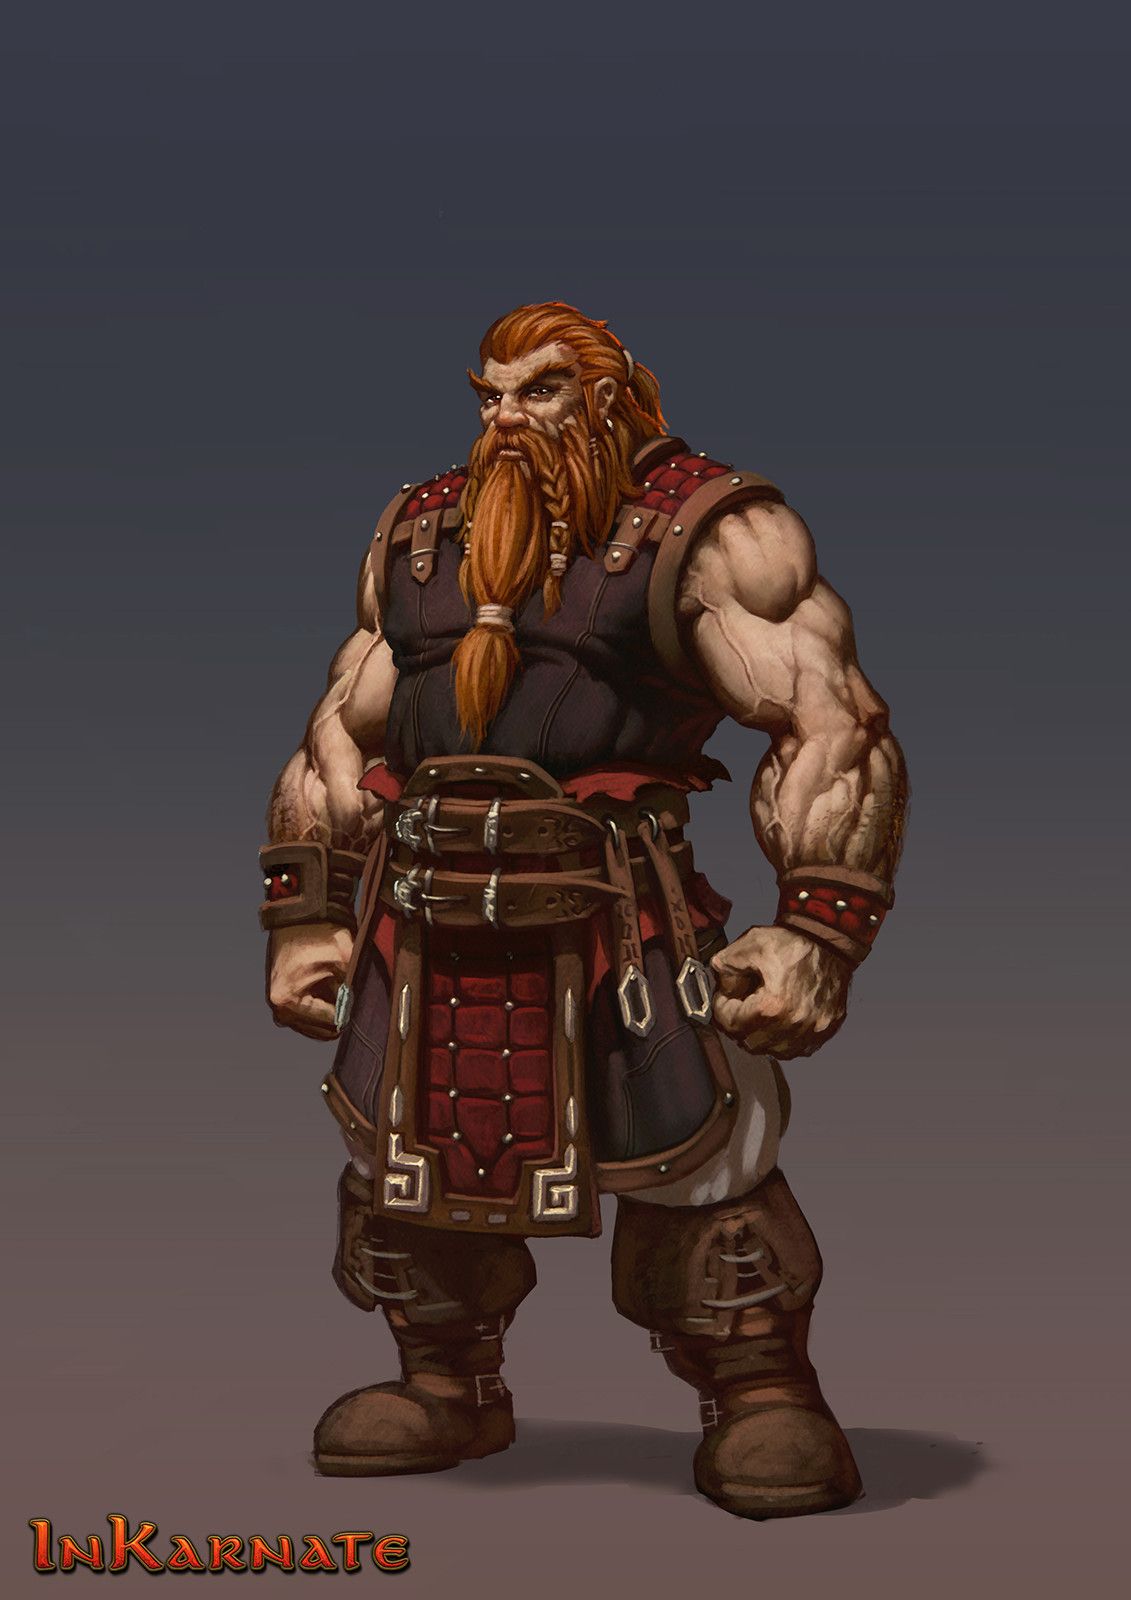 red headed dwarf man